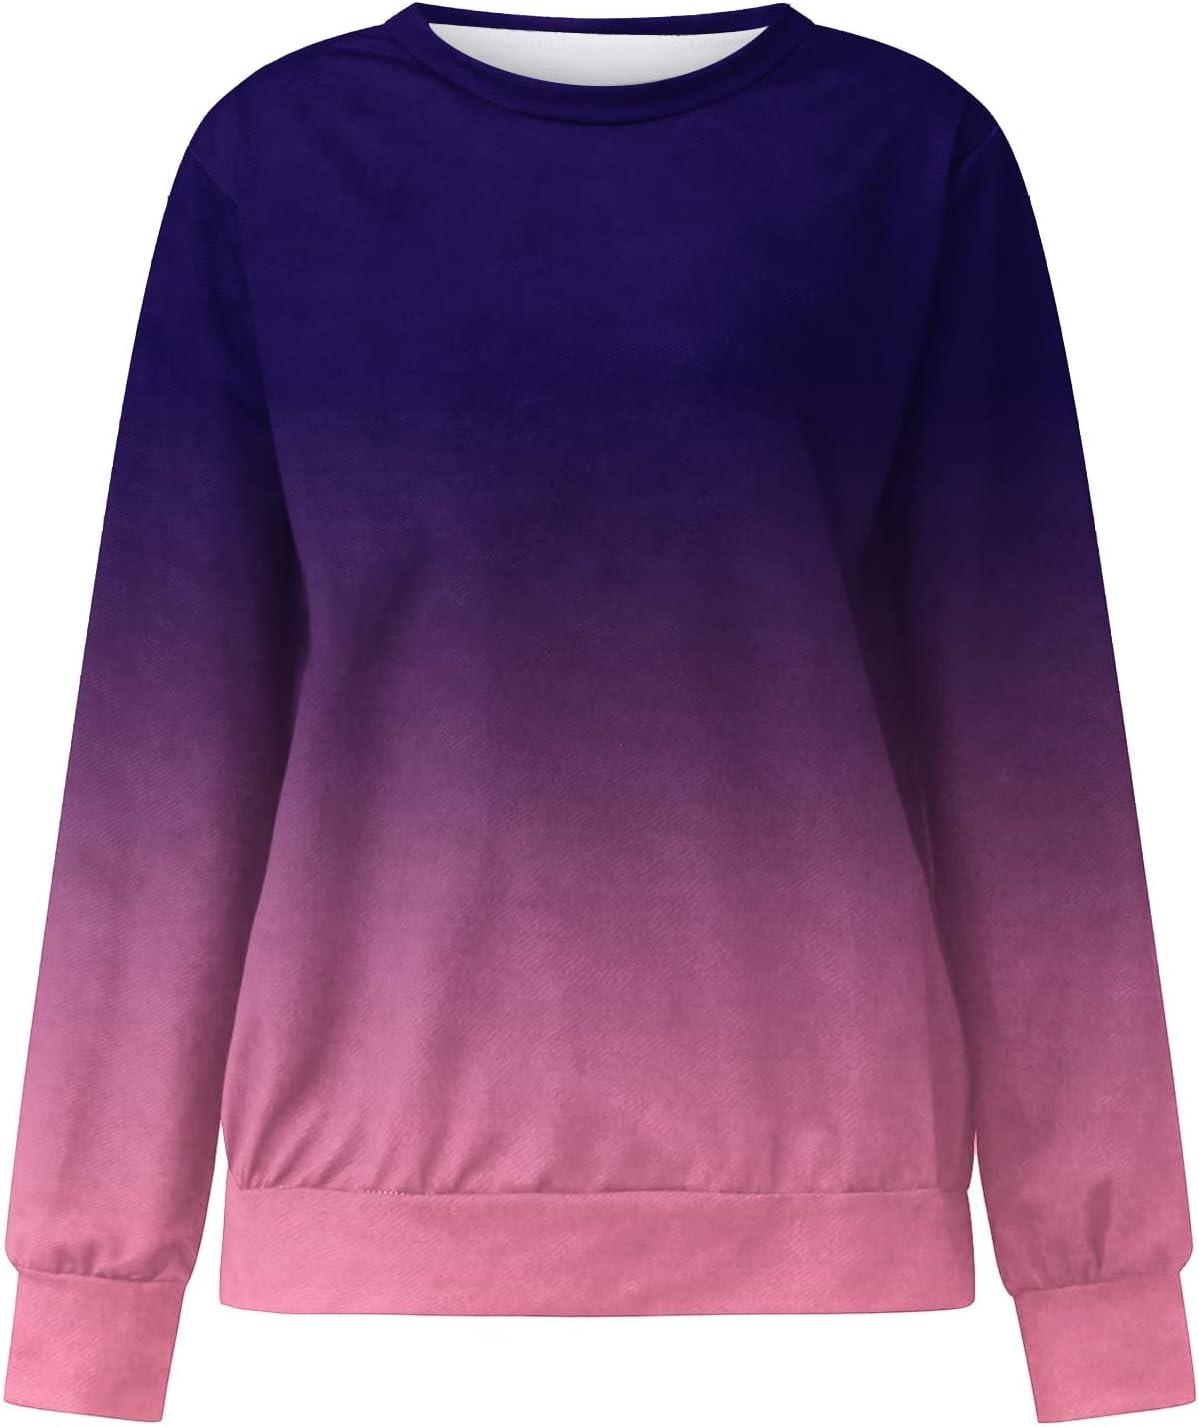 Ganfancp Women's Crewneck Sweatshirt Winter Lightweight Long Sleeve  Pullover Tops Casual Gradient Print Comfy Loose Blouse Purple Women Tops 37  XX-Large